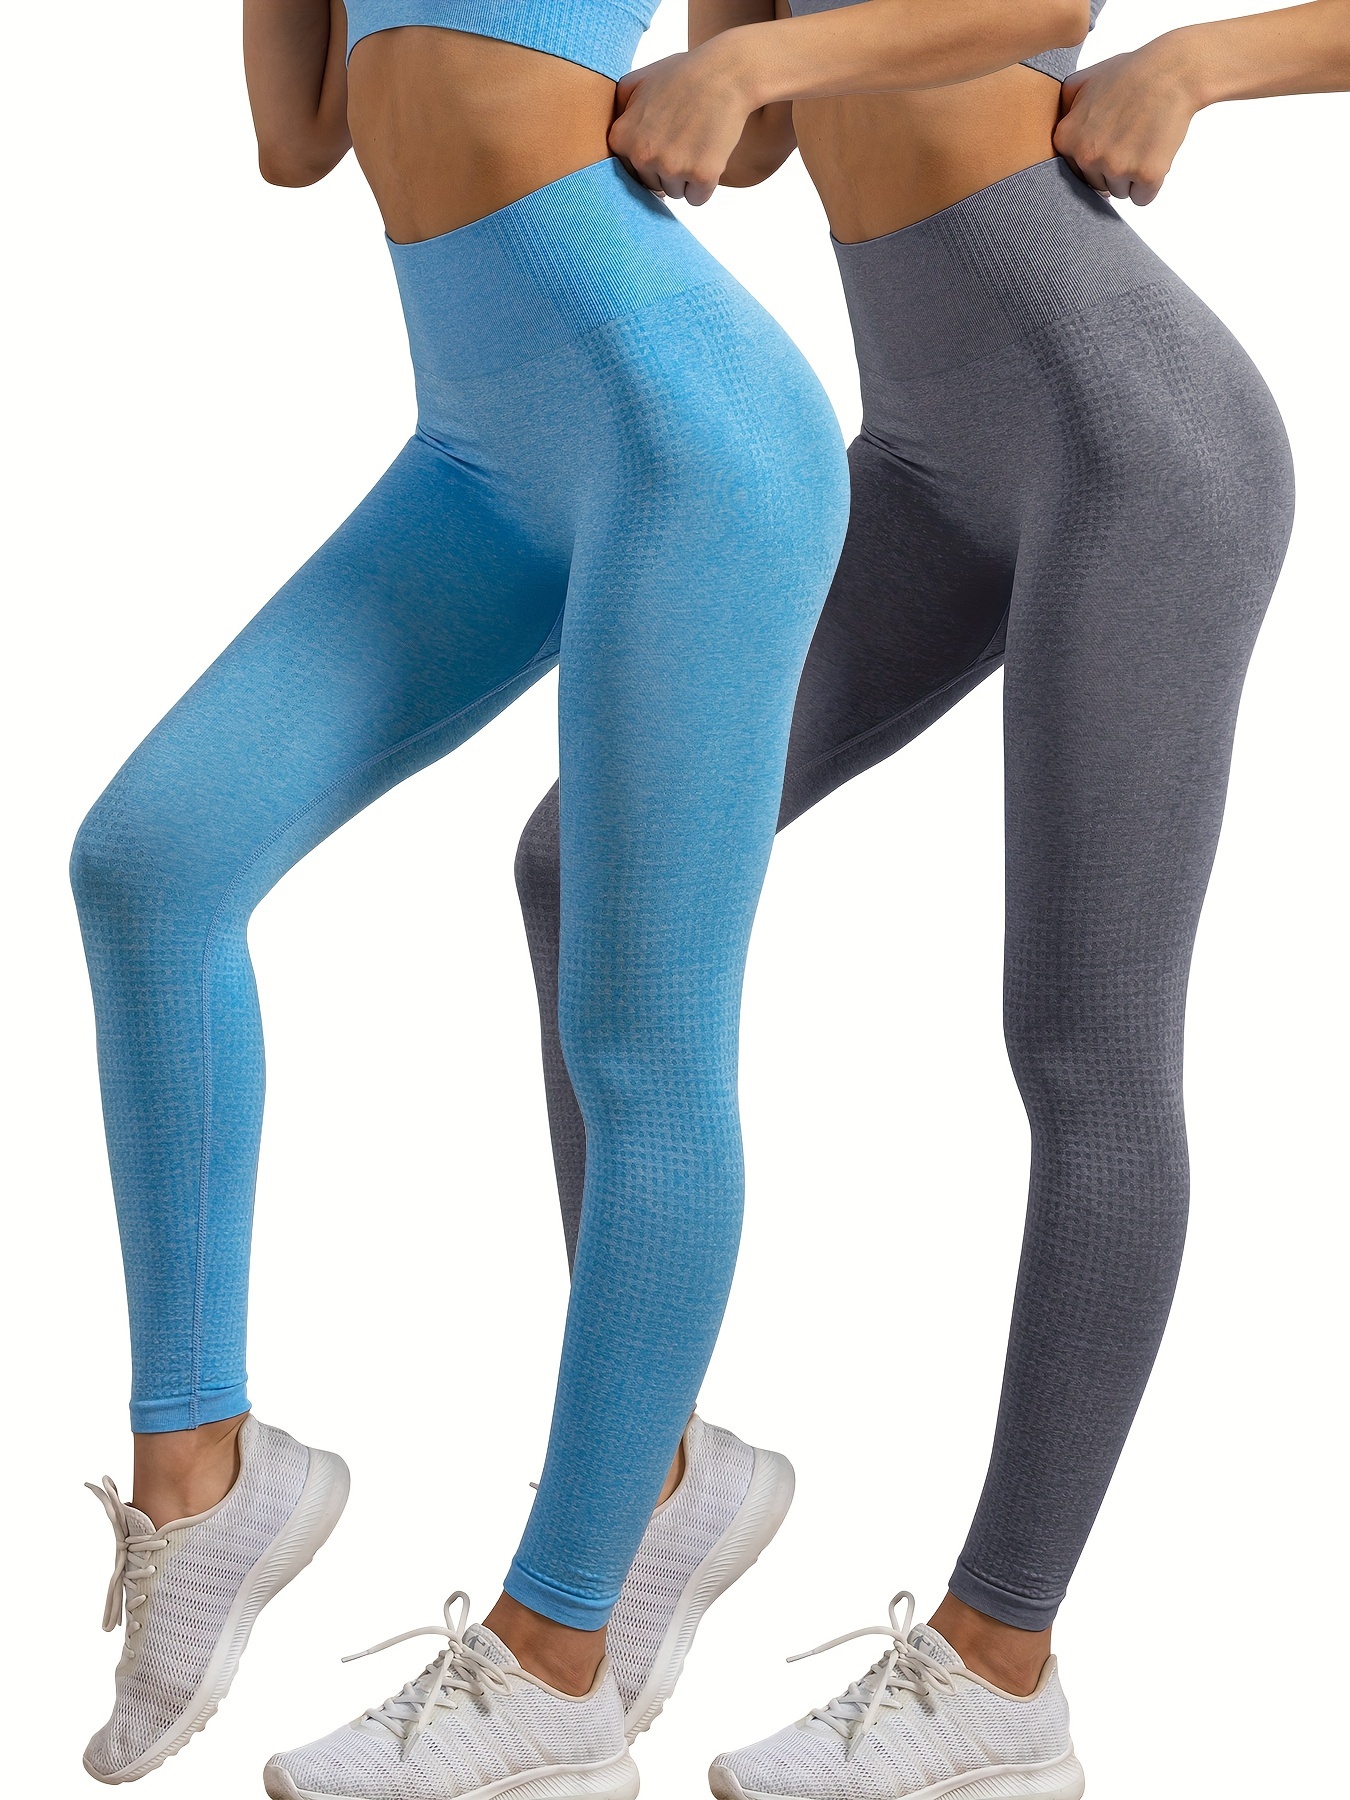 High Waisted Leggings For Women Soft Workout Running Yoga Pants